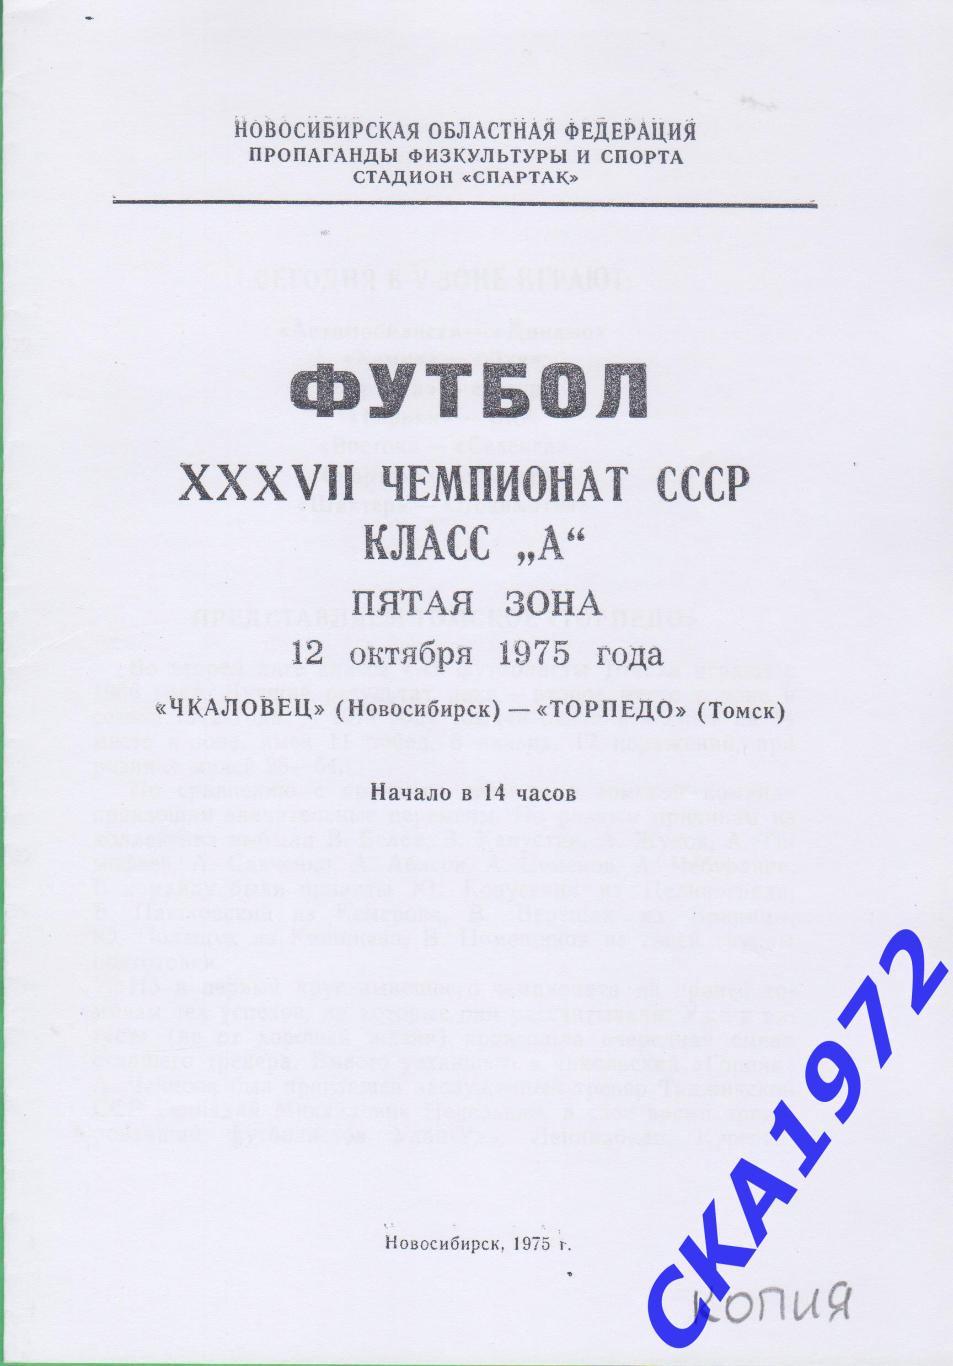 программа Чкаловец Новосибирск - Торпедо Томск 1975 копия